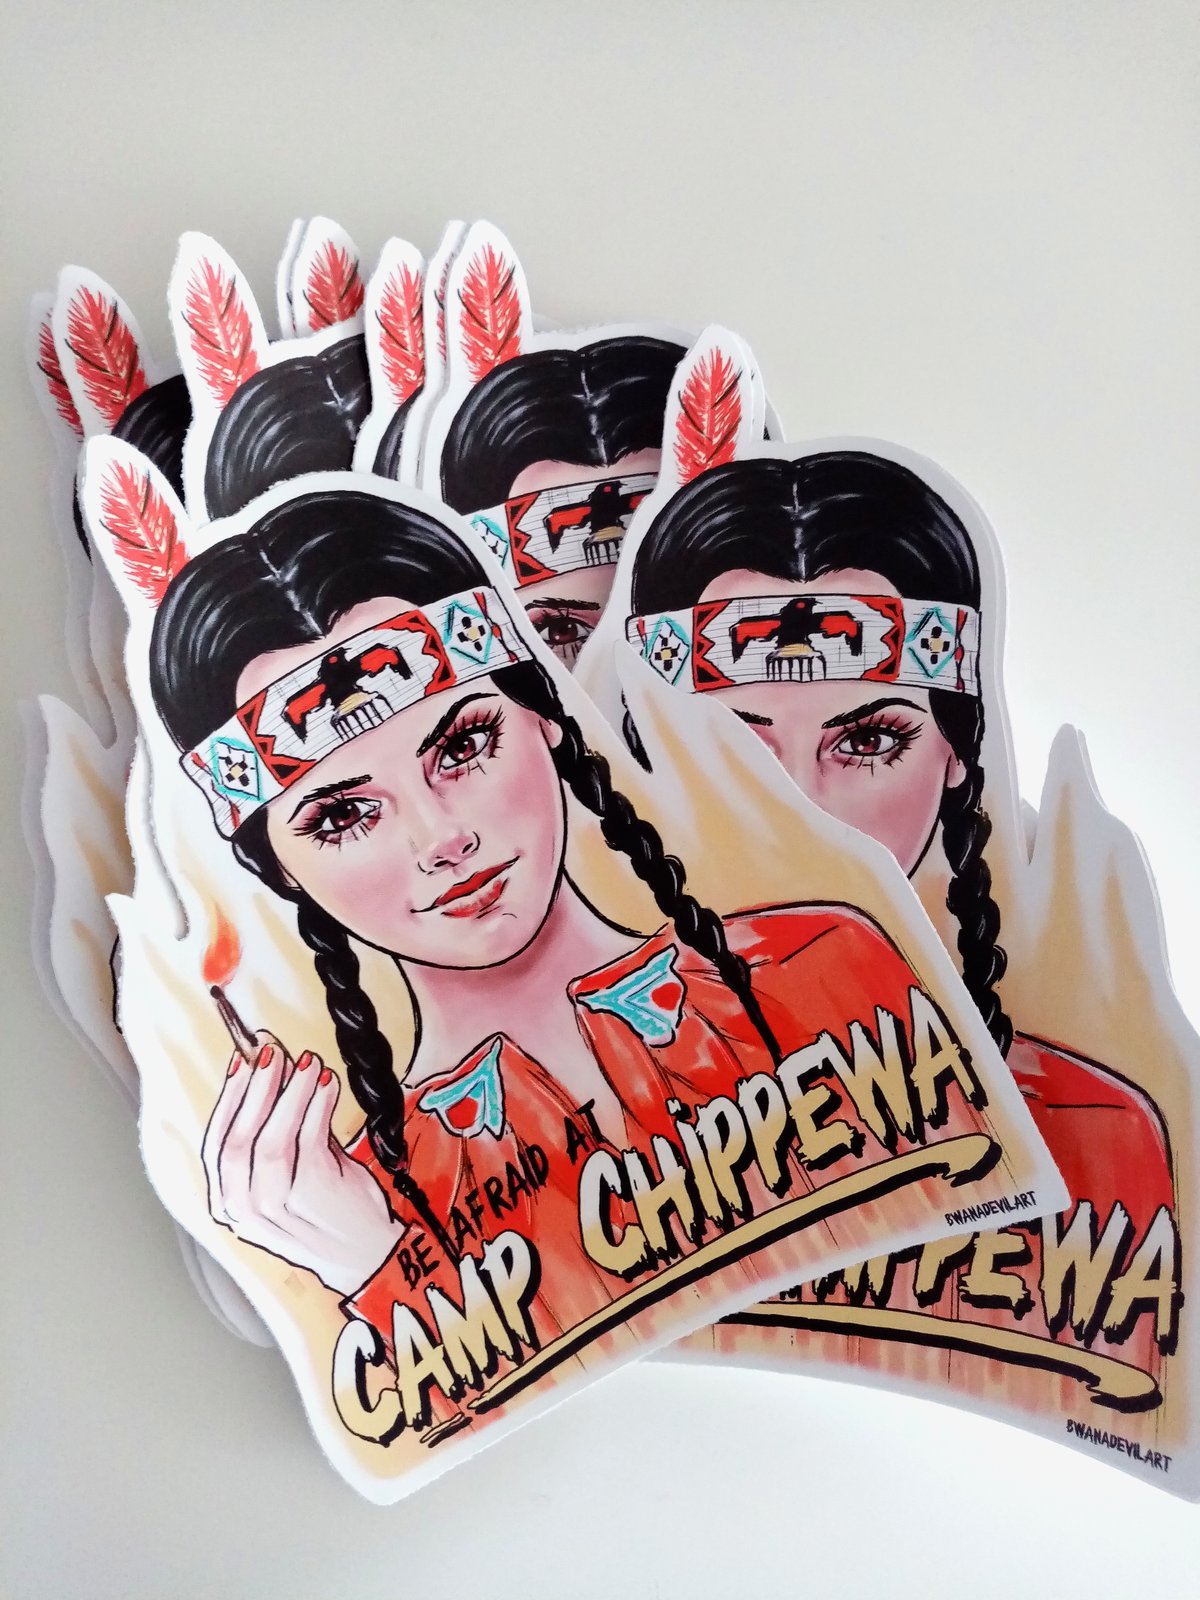 Image of Wednesday Addams (Camp Chippewa) Vinyl Sticker 